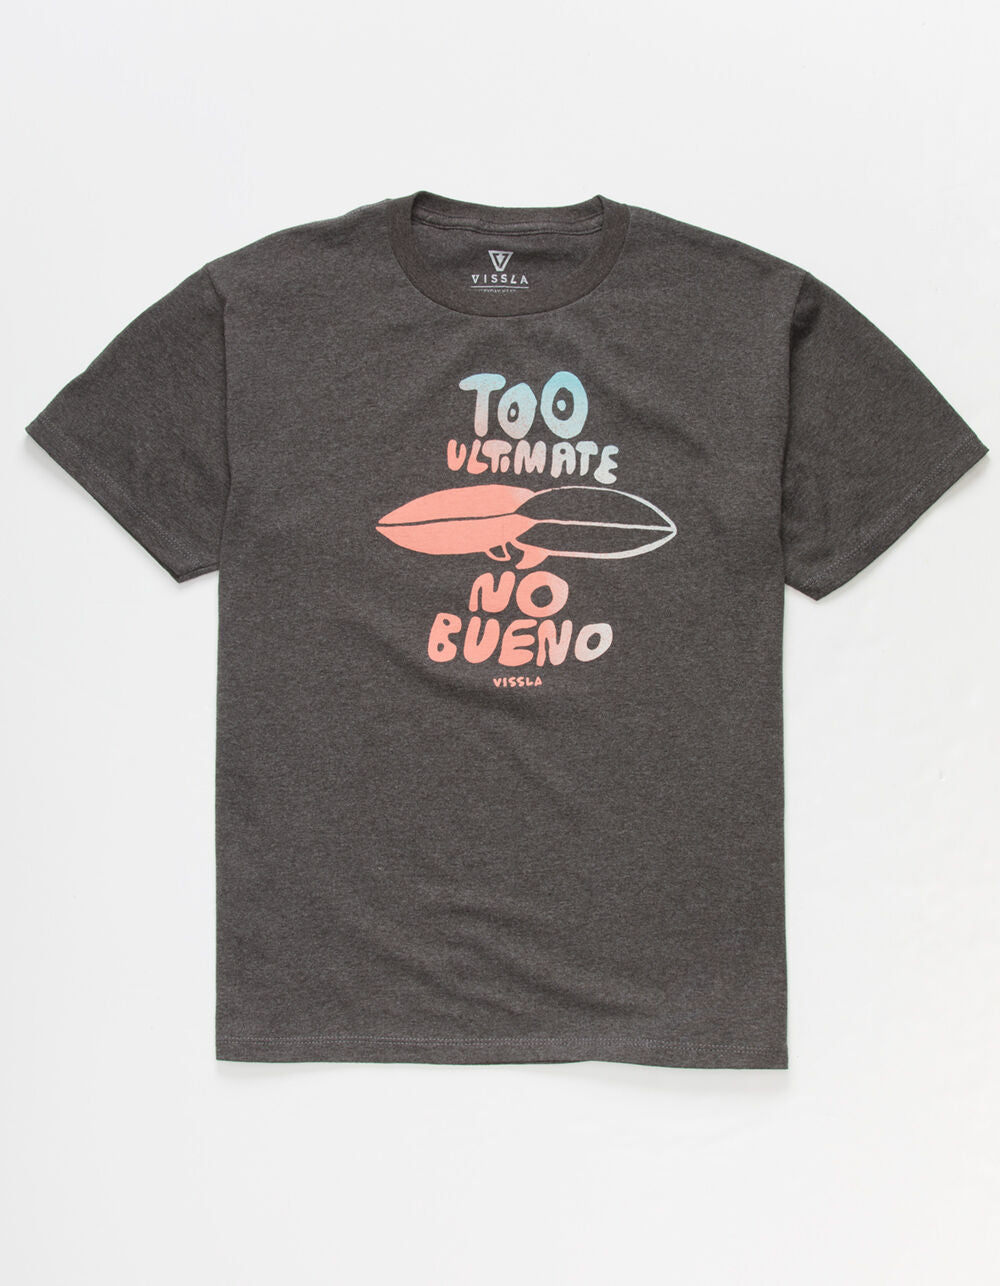 Camiseta Niño Vissla |  Too Ultimate No Bueno